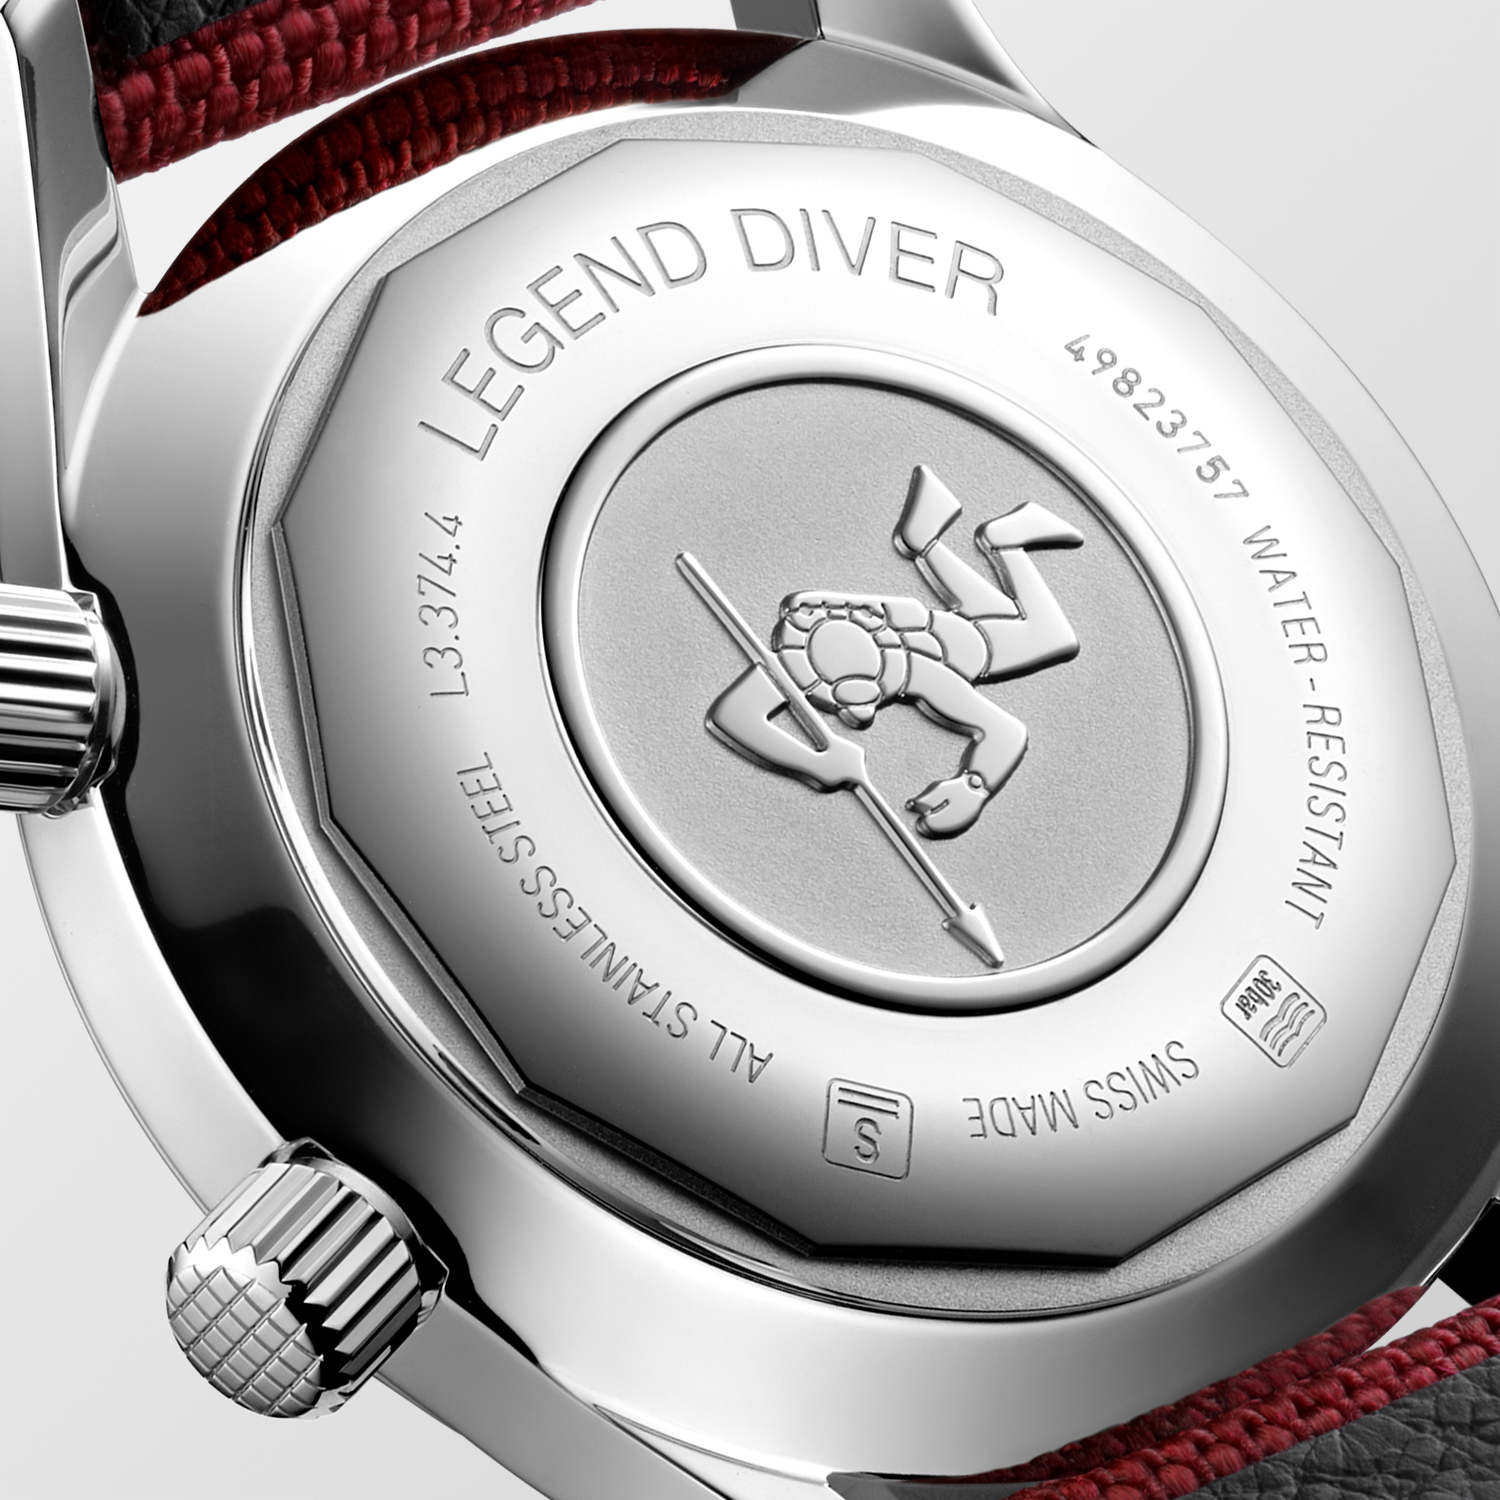 The Longines Legend Diver Watch L3.374.4.40.2 Detalle trasera